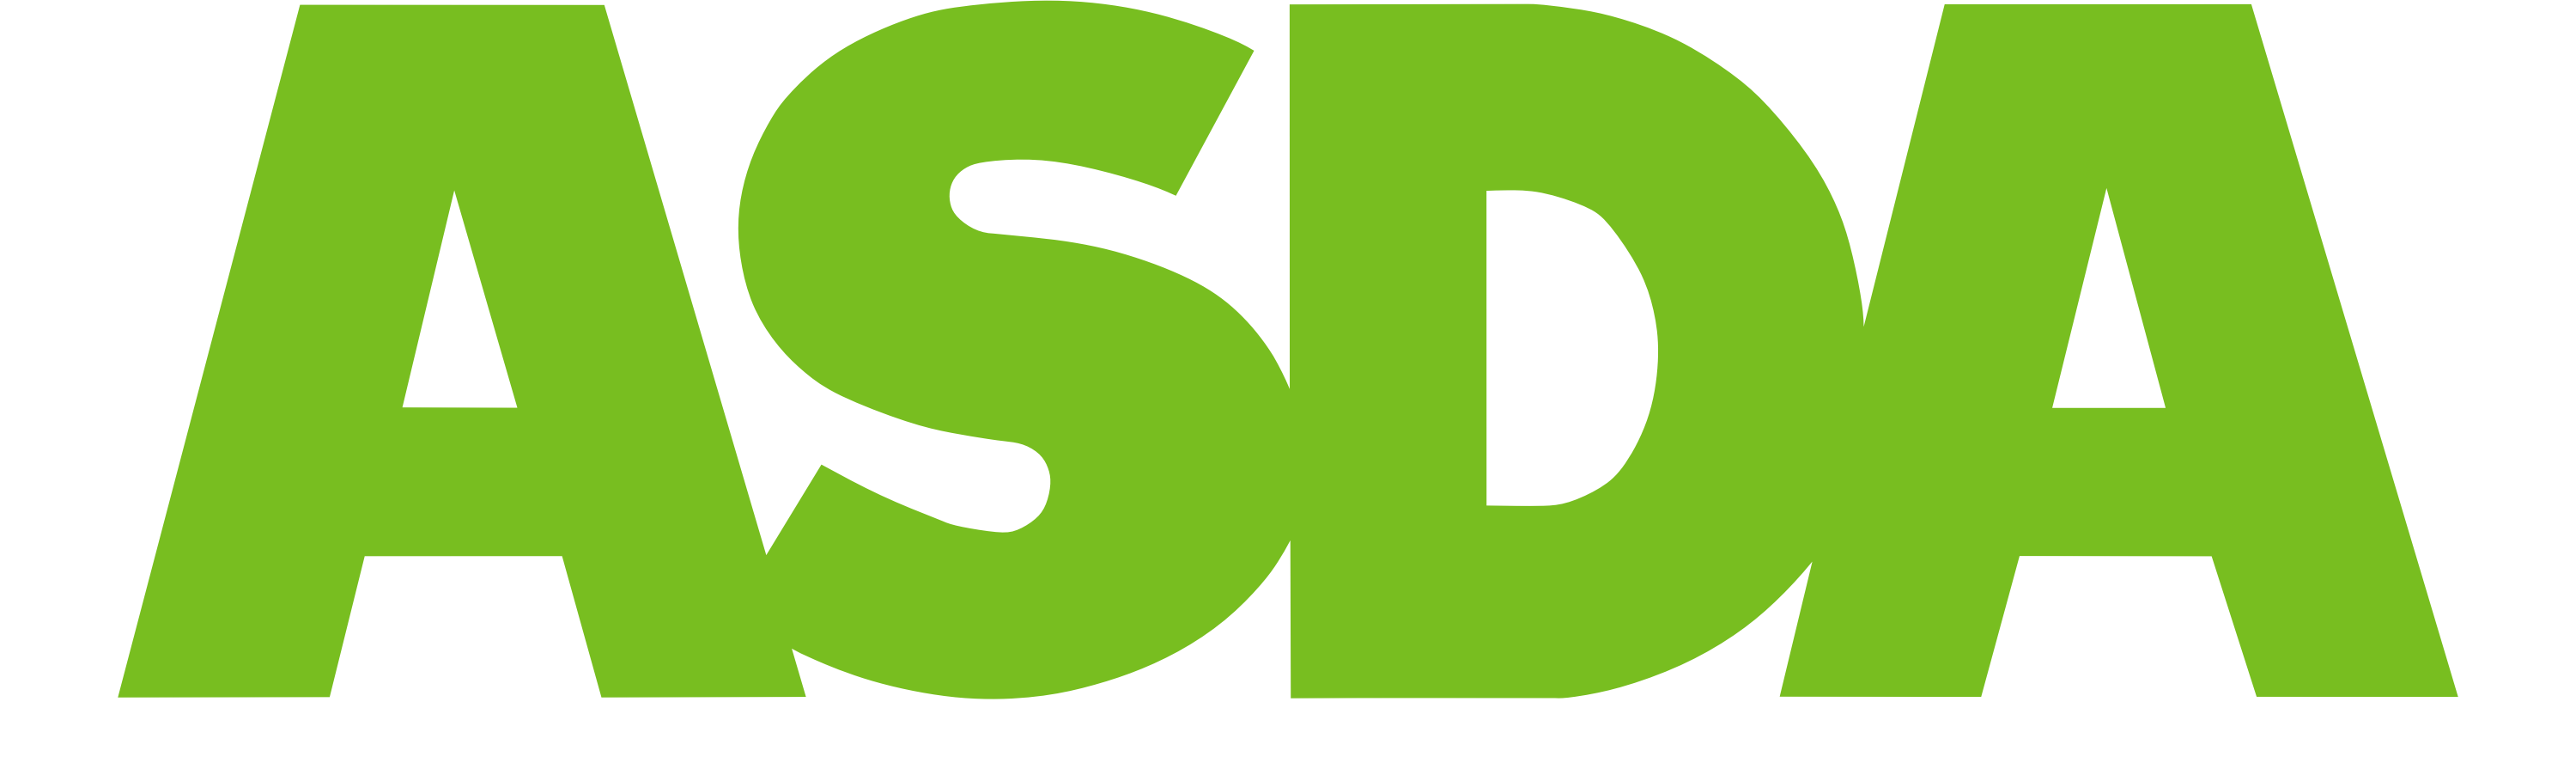 a logo of ASDA supermarket in bright green